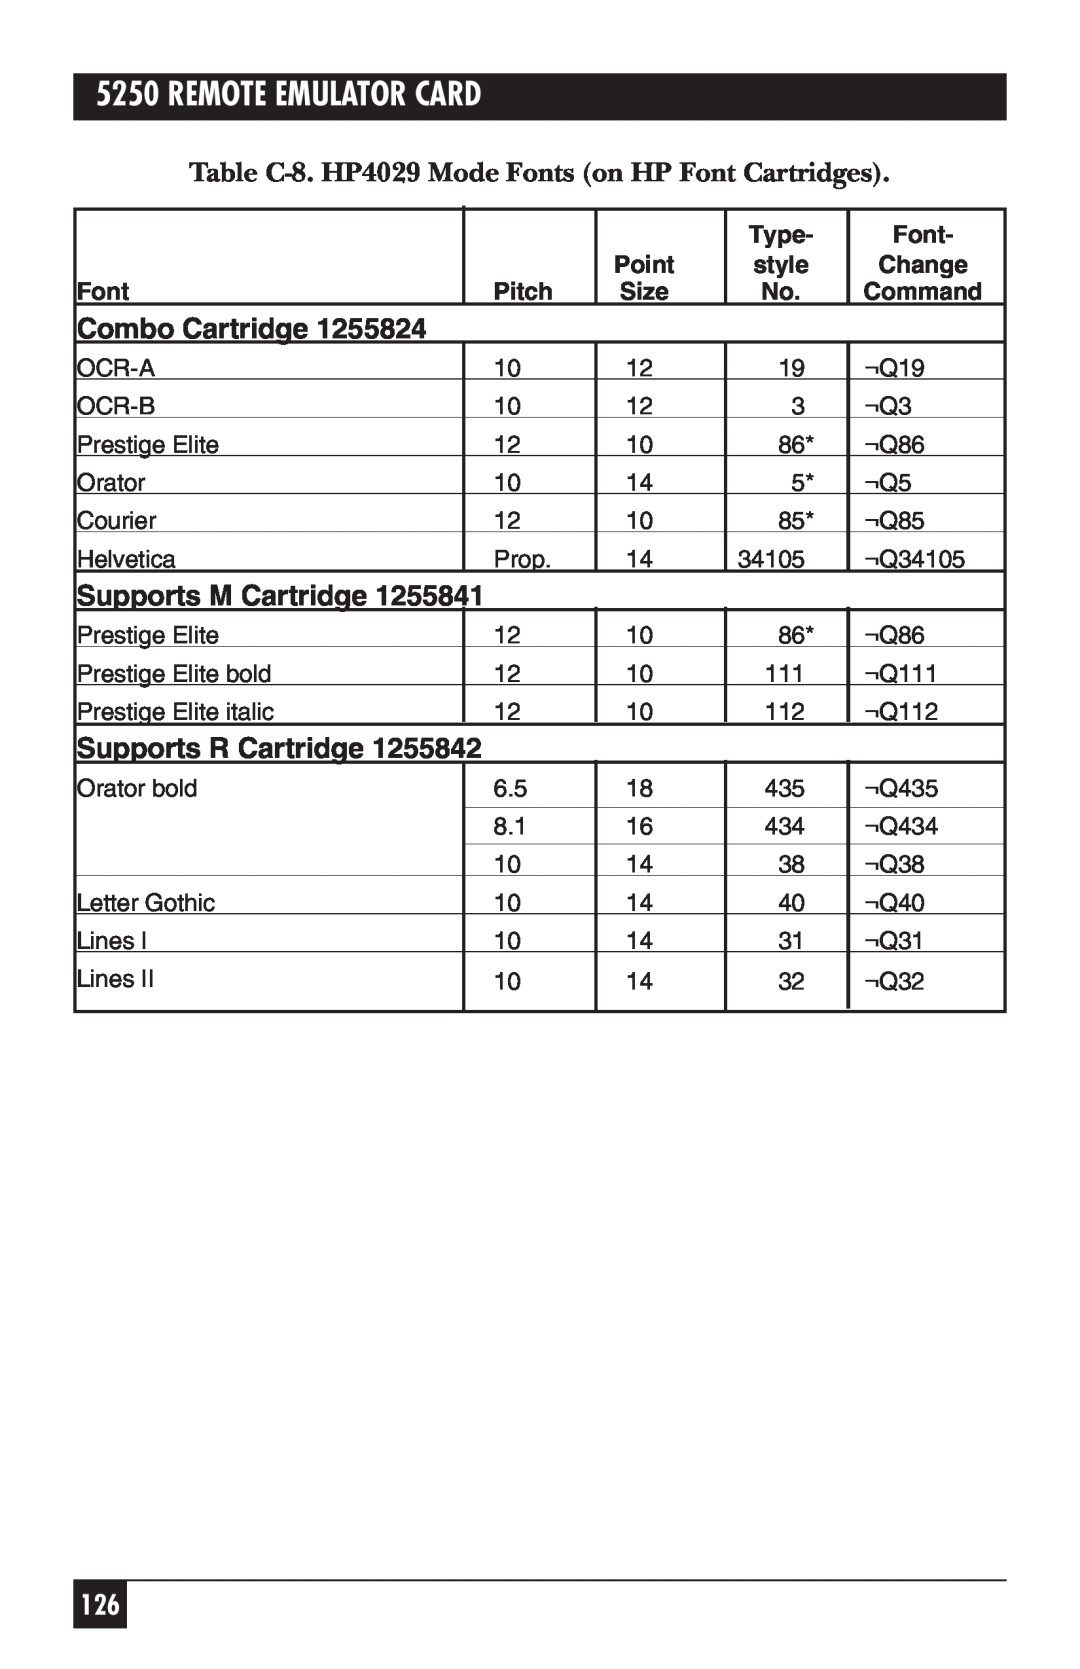 Black Box 5250 manual Remote Emulator Card, Table C-8.HP4029 Mode Fonts on HP Font Cartridges, Combo Cartridge 